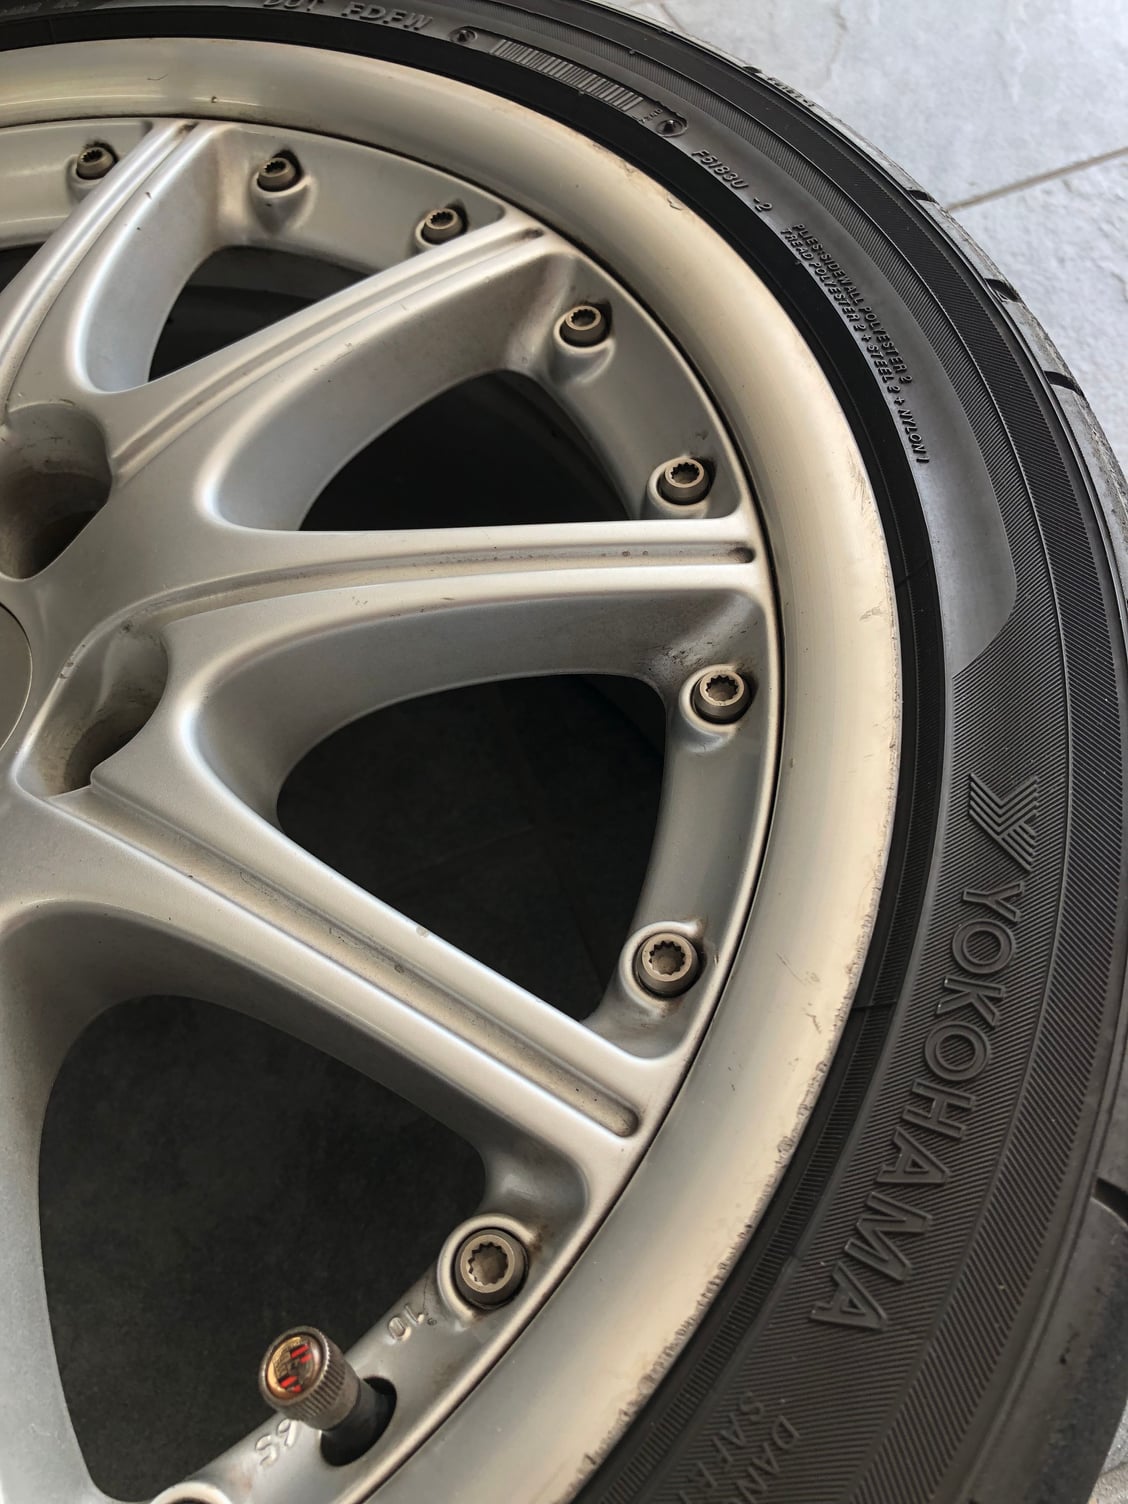 What are these wheels? - Rennlist - Porsche Discussion Forums